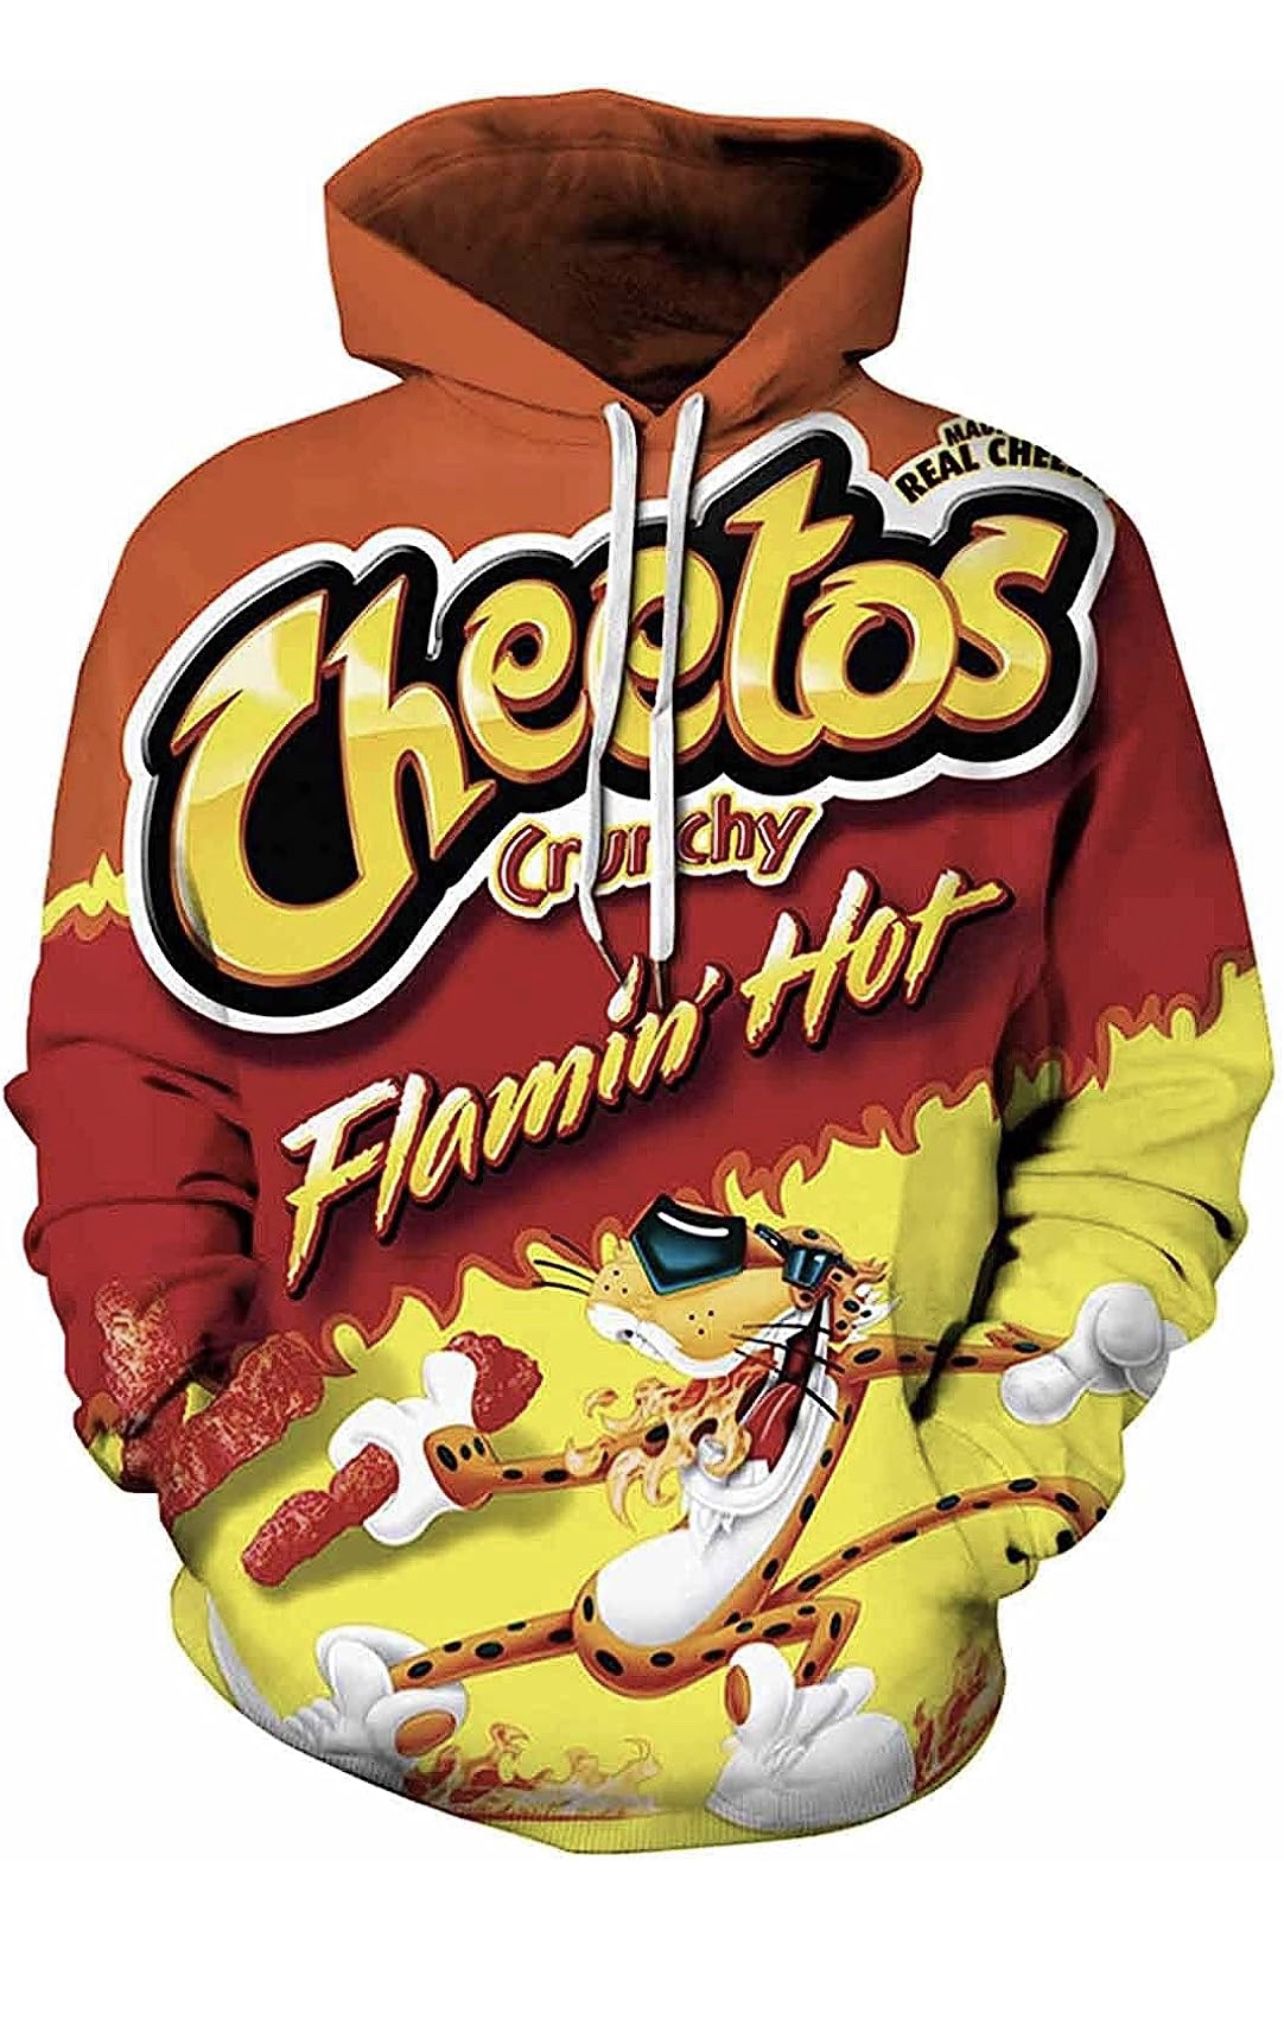 Cheetos Gussie